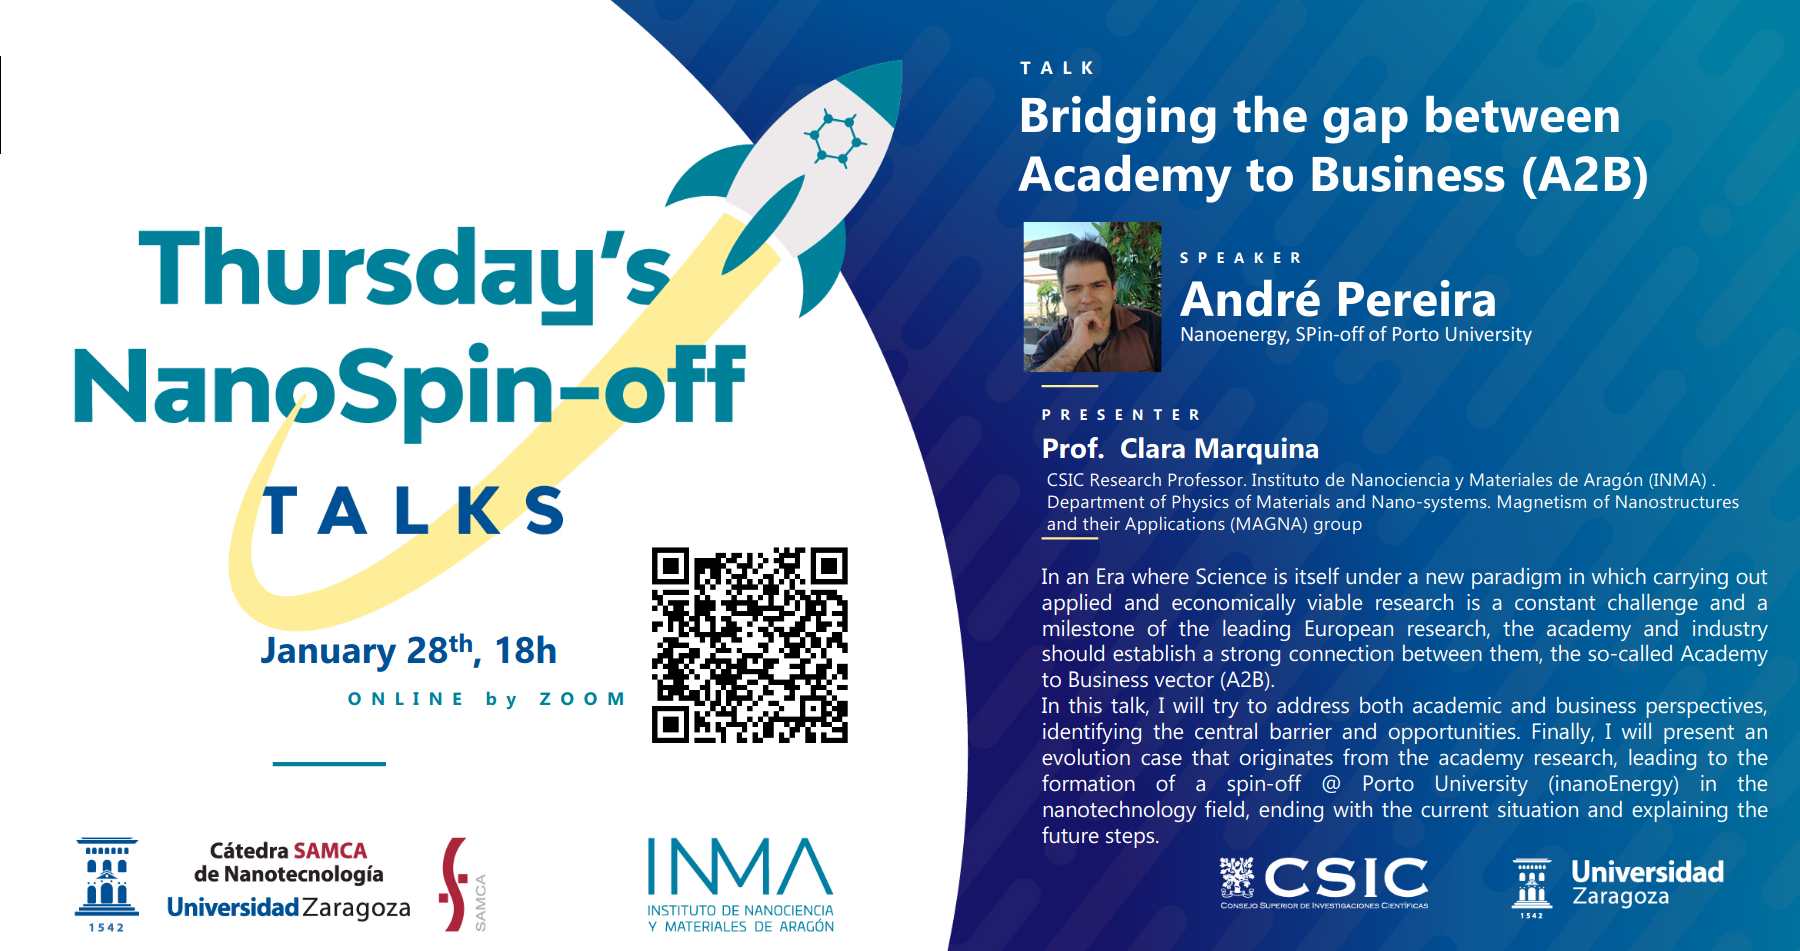 Cátedra SAMCA de Nanotecnología: “Thursday´s NanoSpin-off Talks” Bridging the gap between Academy to Business (A2B)